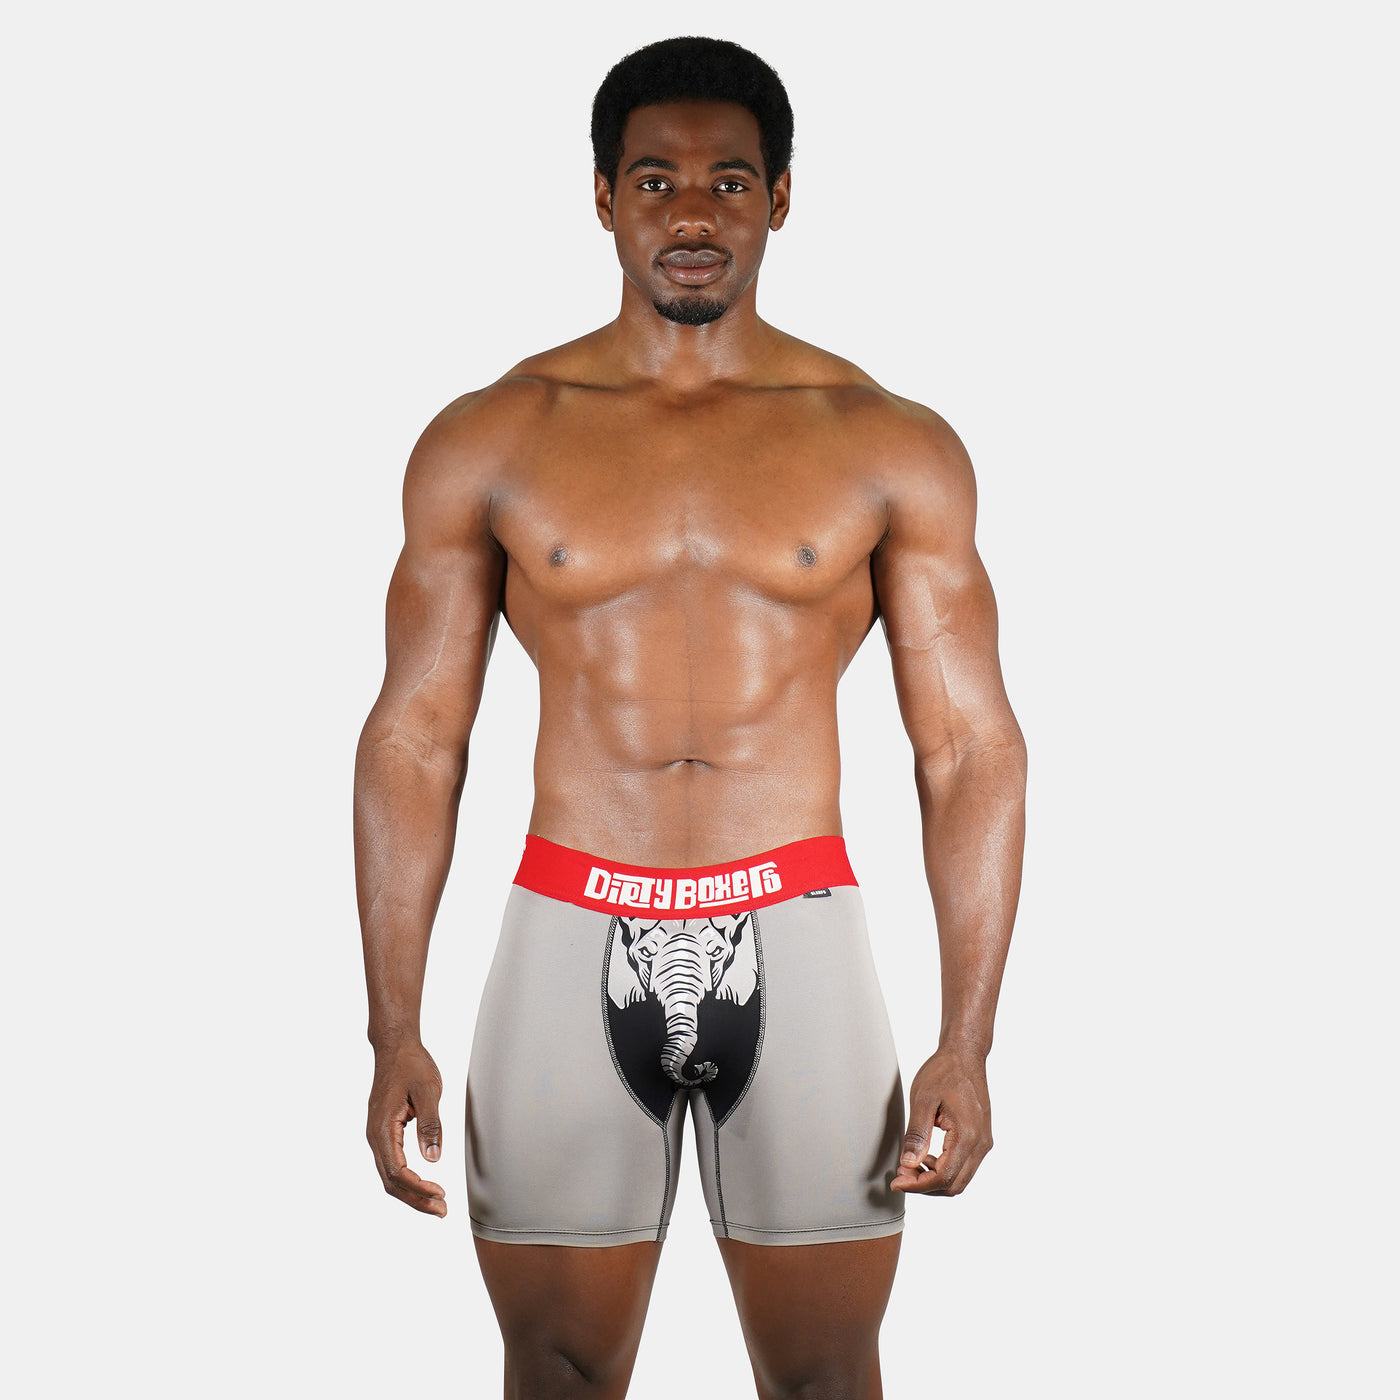 Elephant Trunk Dirty Boxers Men's Underwear